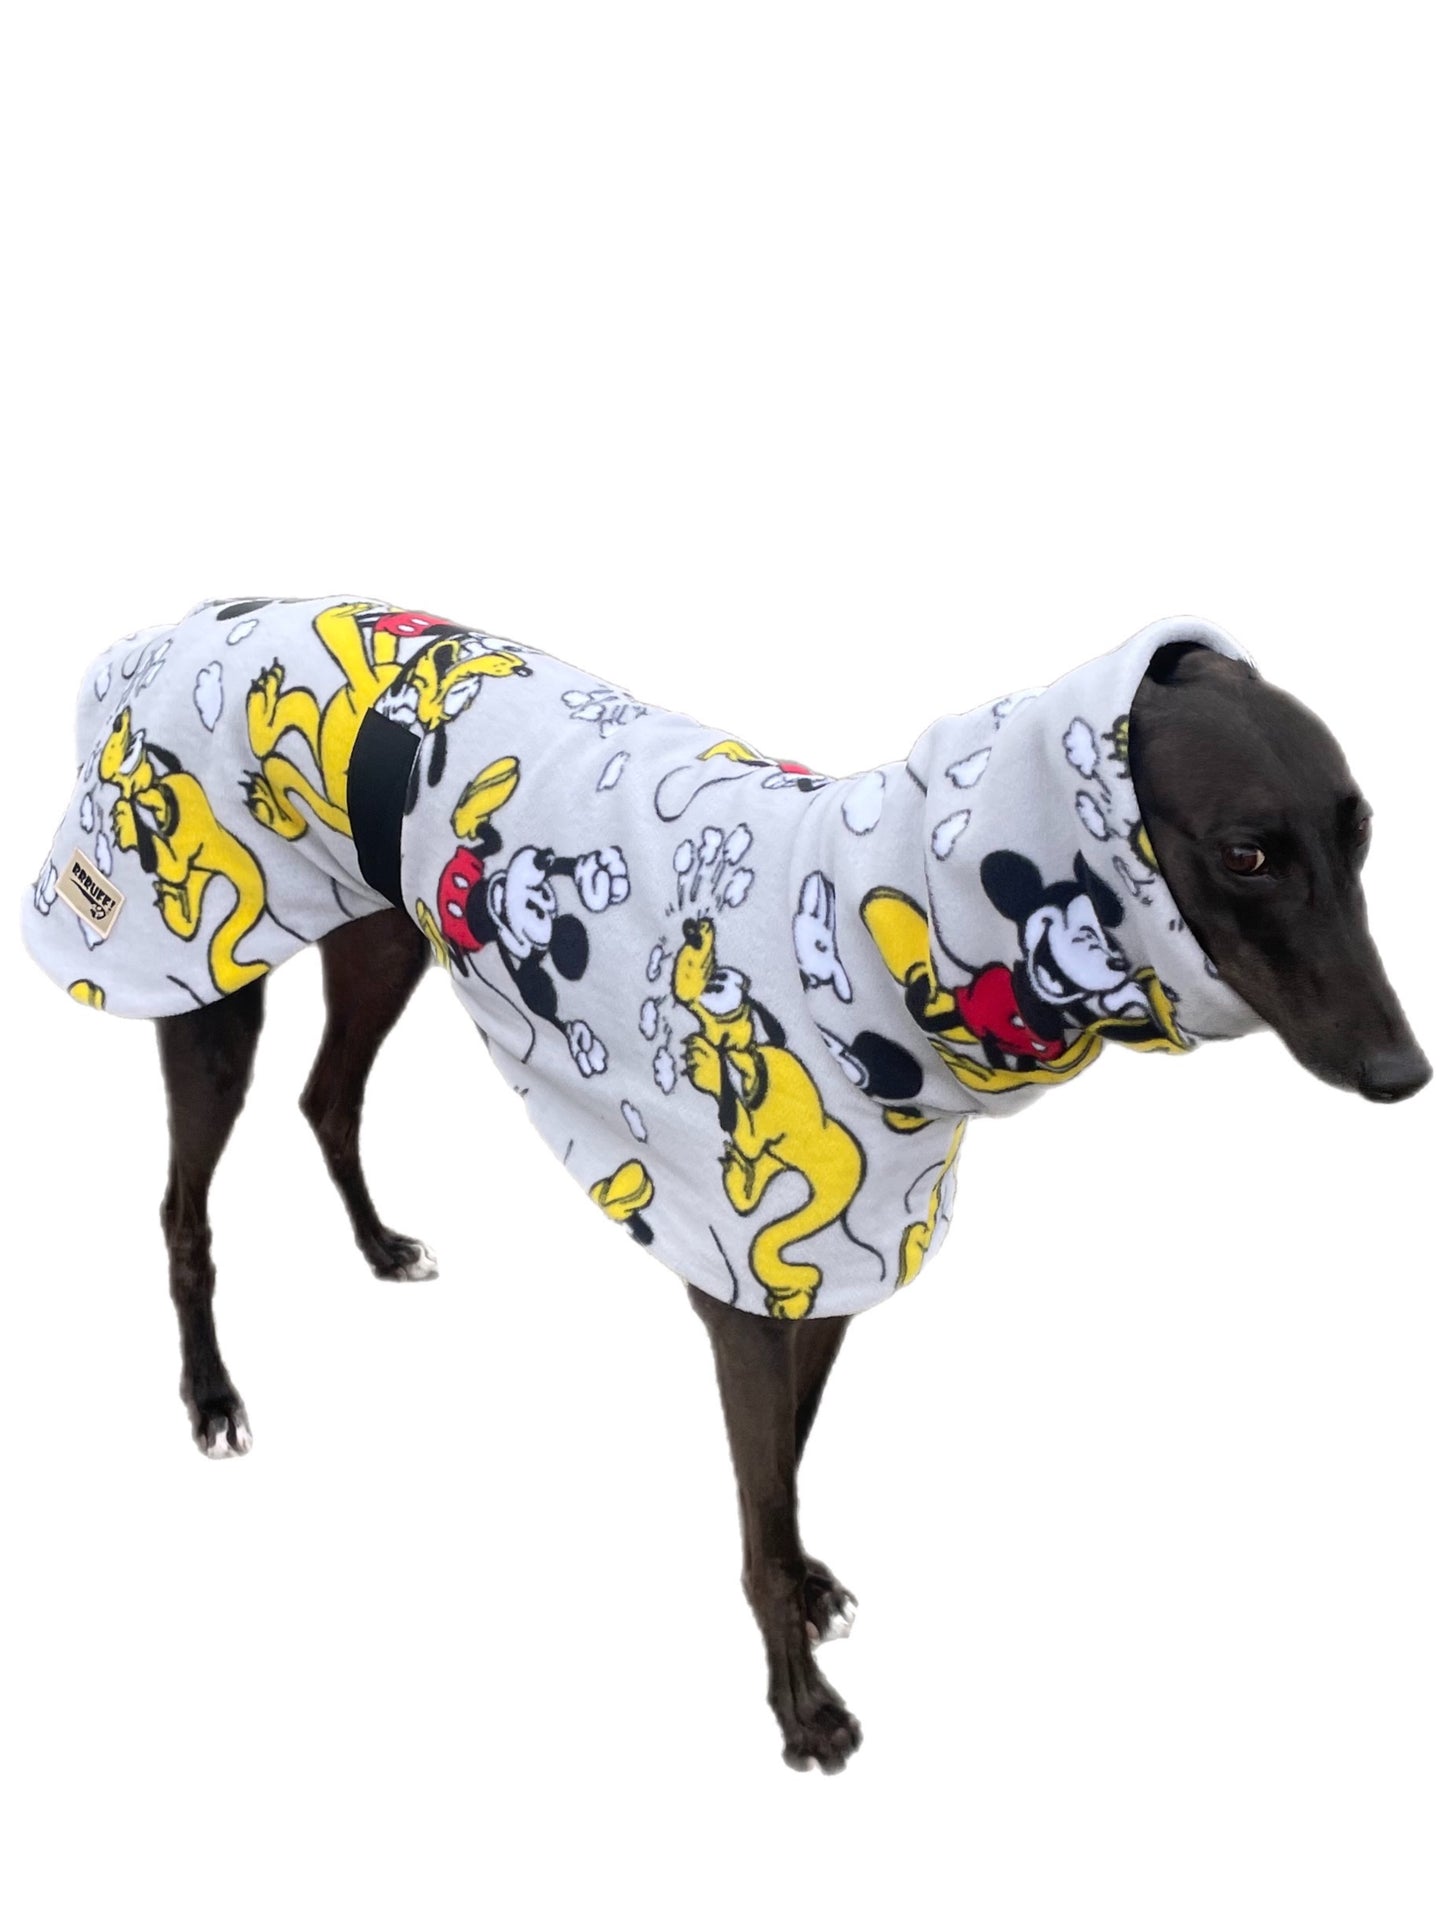 Mickey & Pluto greyhound coat deluxe style double polar fleece washable